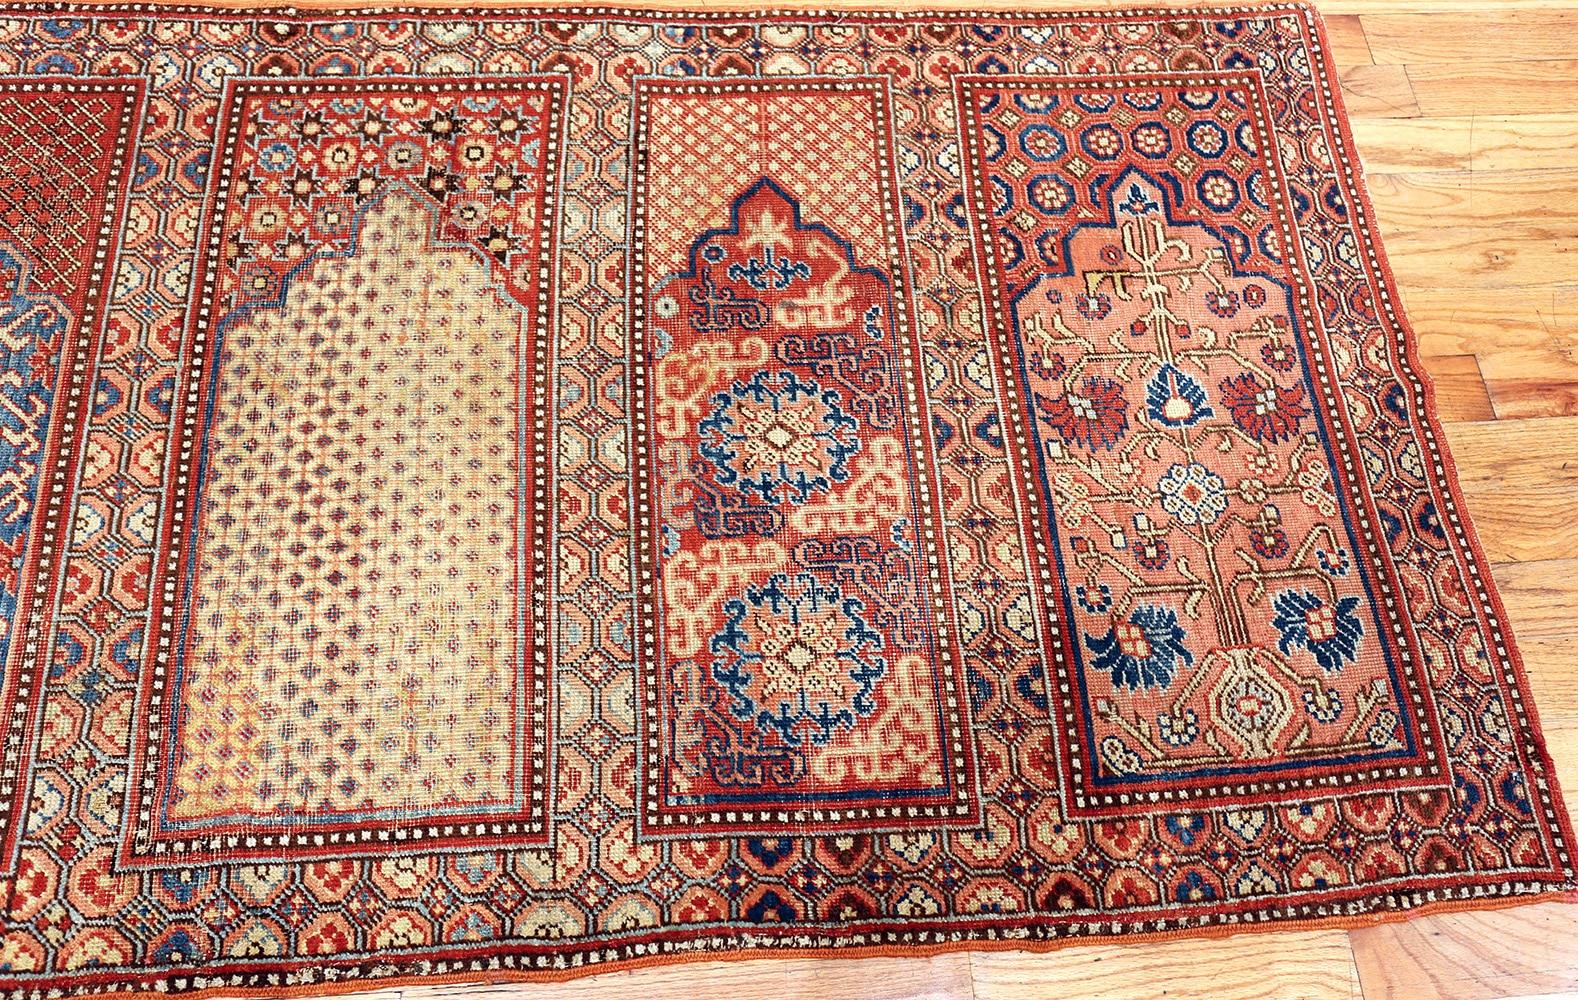 1800's Khotan Saf Prayer Rug from East Turkestan. Size: 8 ft 5 in x 3 ft 9 in  6